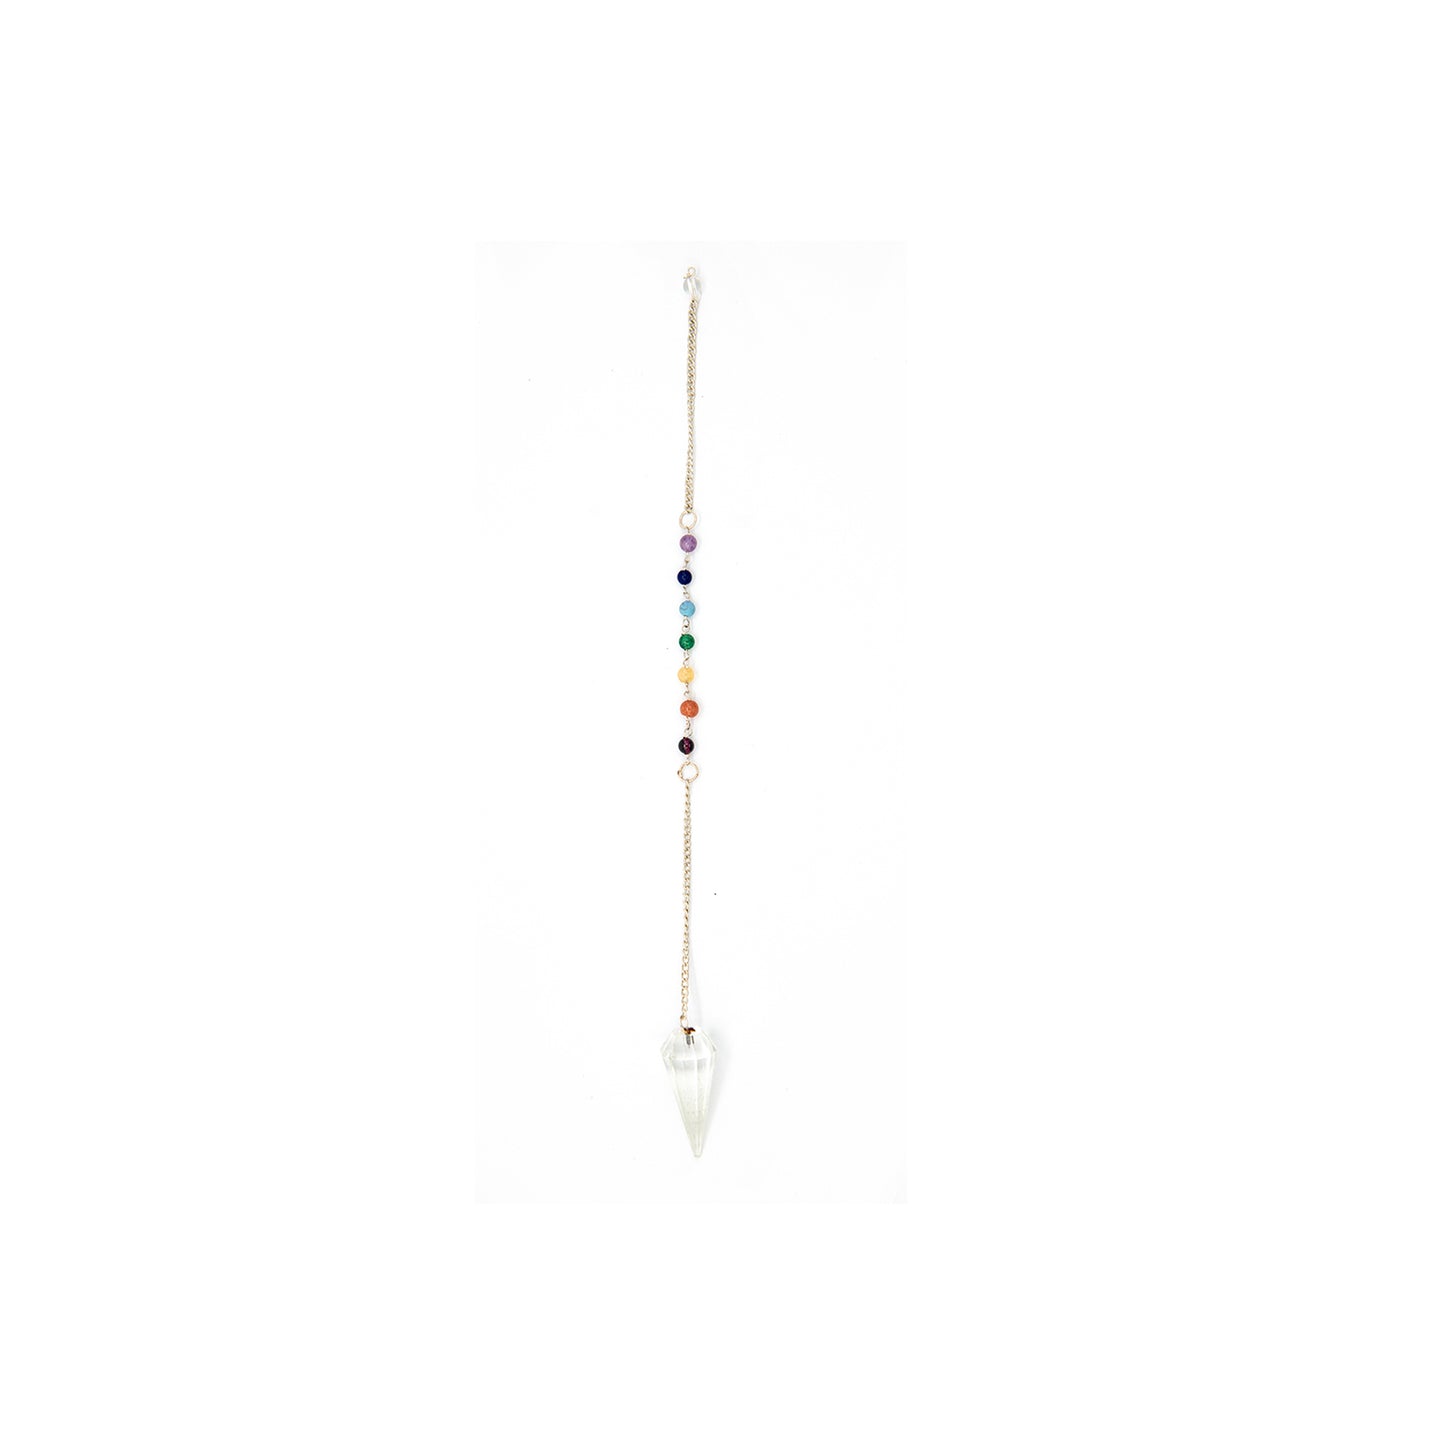 Faceted Quartz Pendulum with Chakra Stones.  Solve your indecision with this powerful pendulum.  Quartz pendulum is approx. 1.5 inches long.